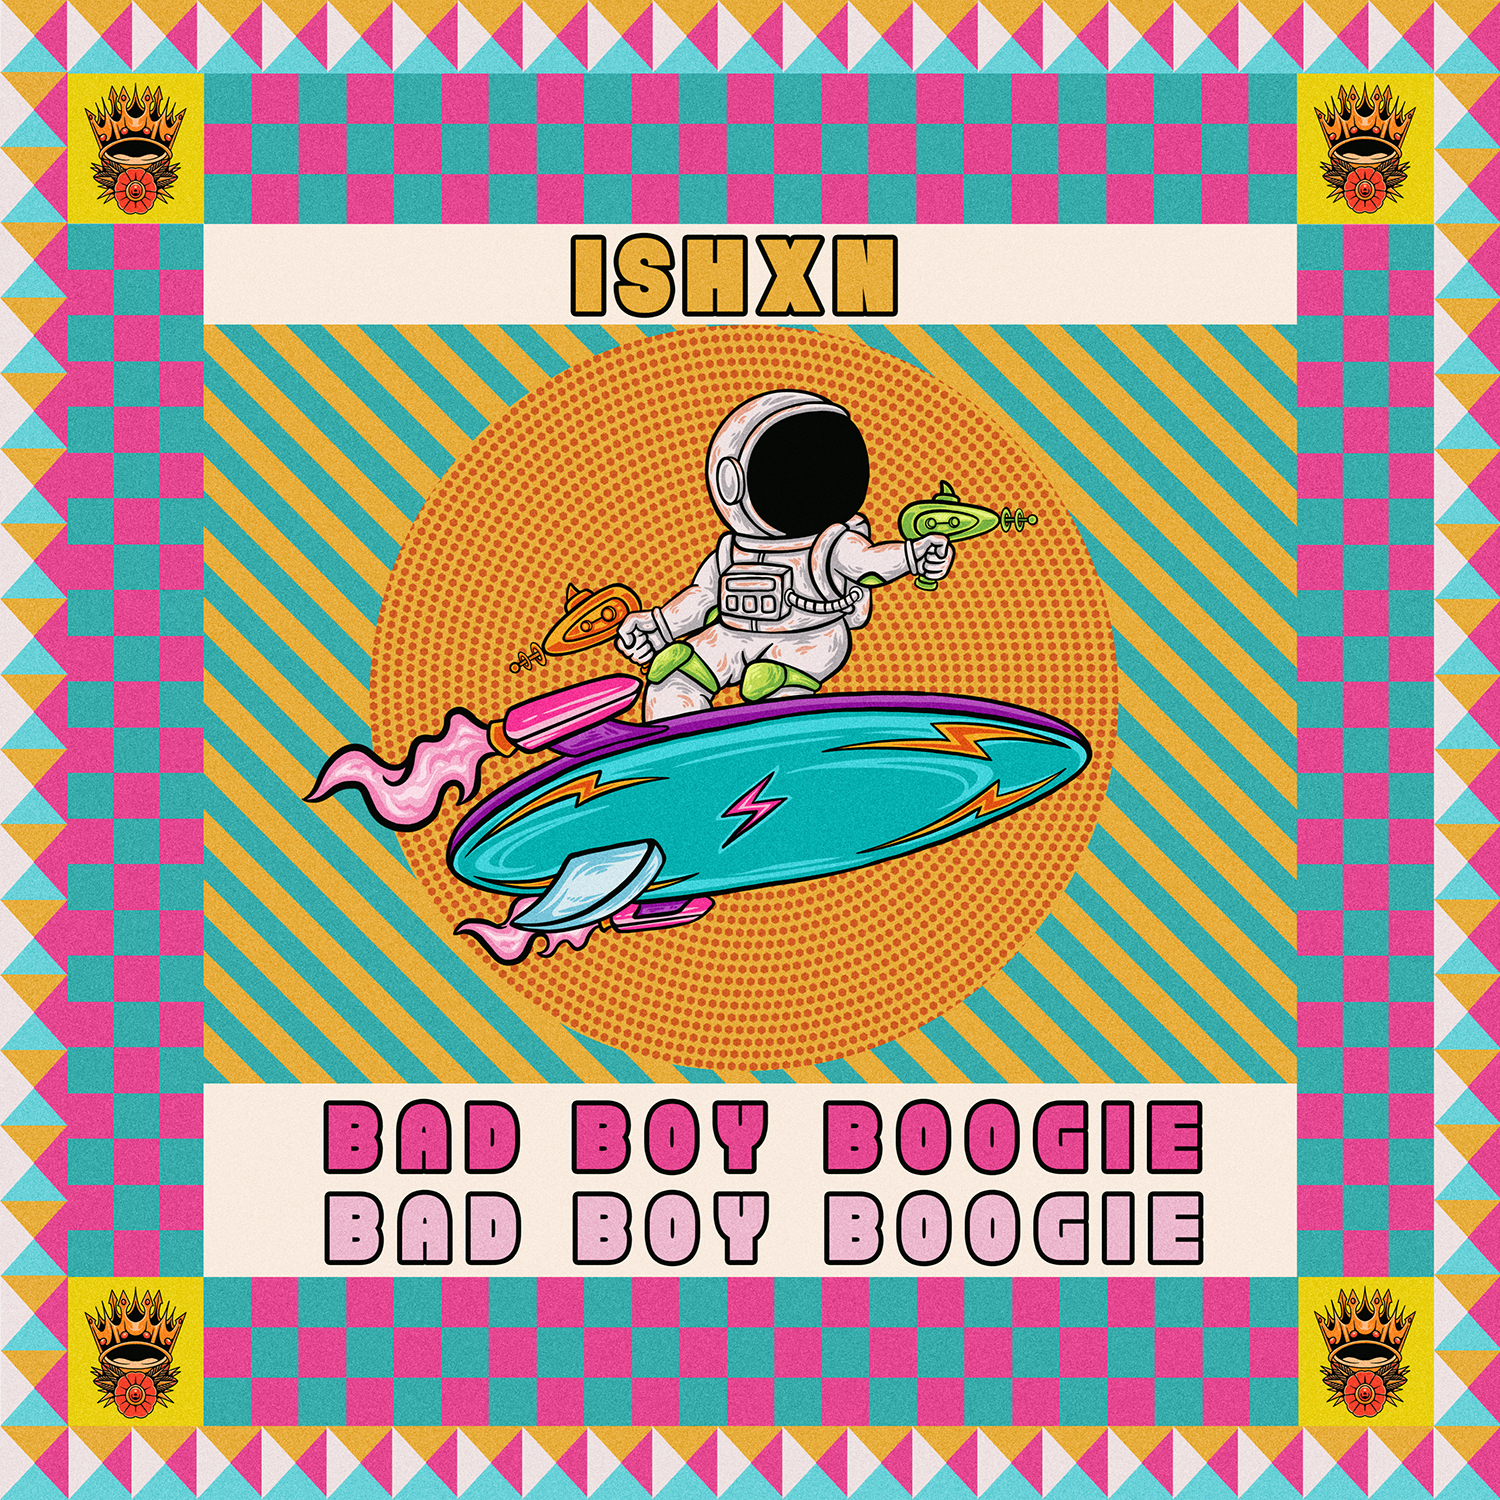 ISHXN - Bad Boy Boogie (Original Mix) 